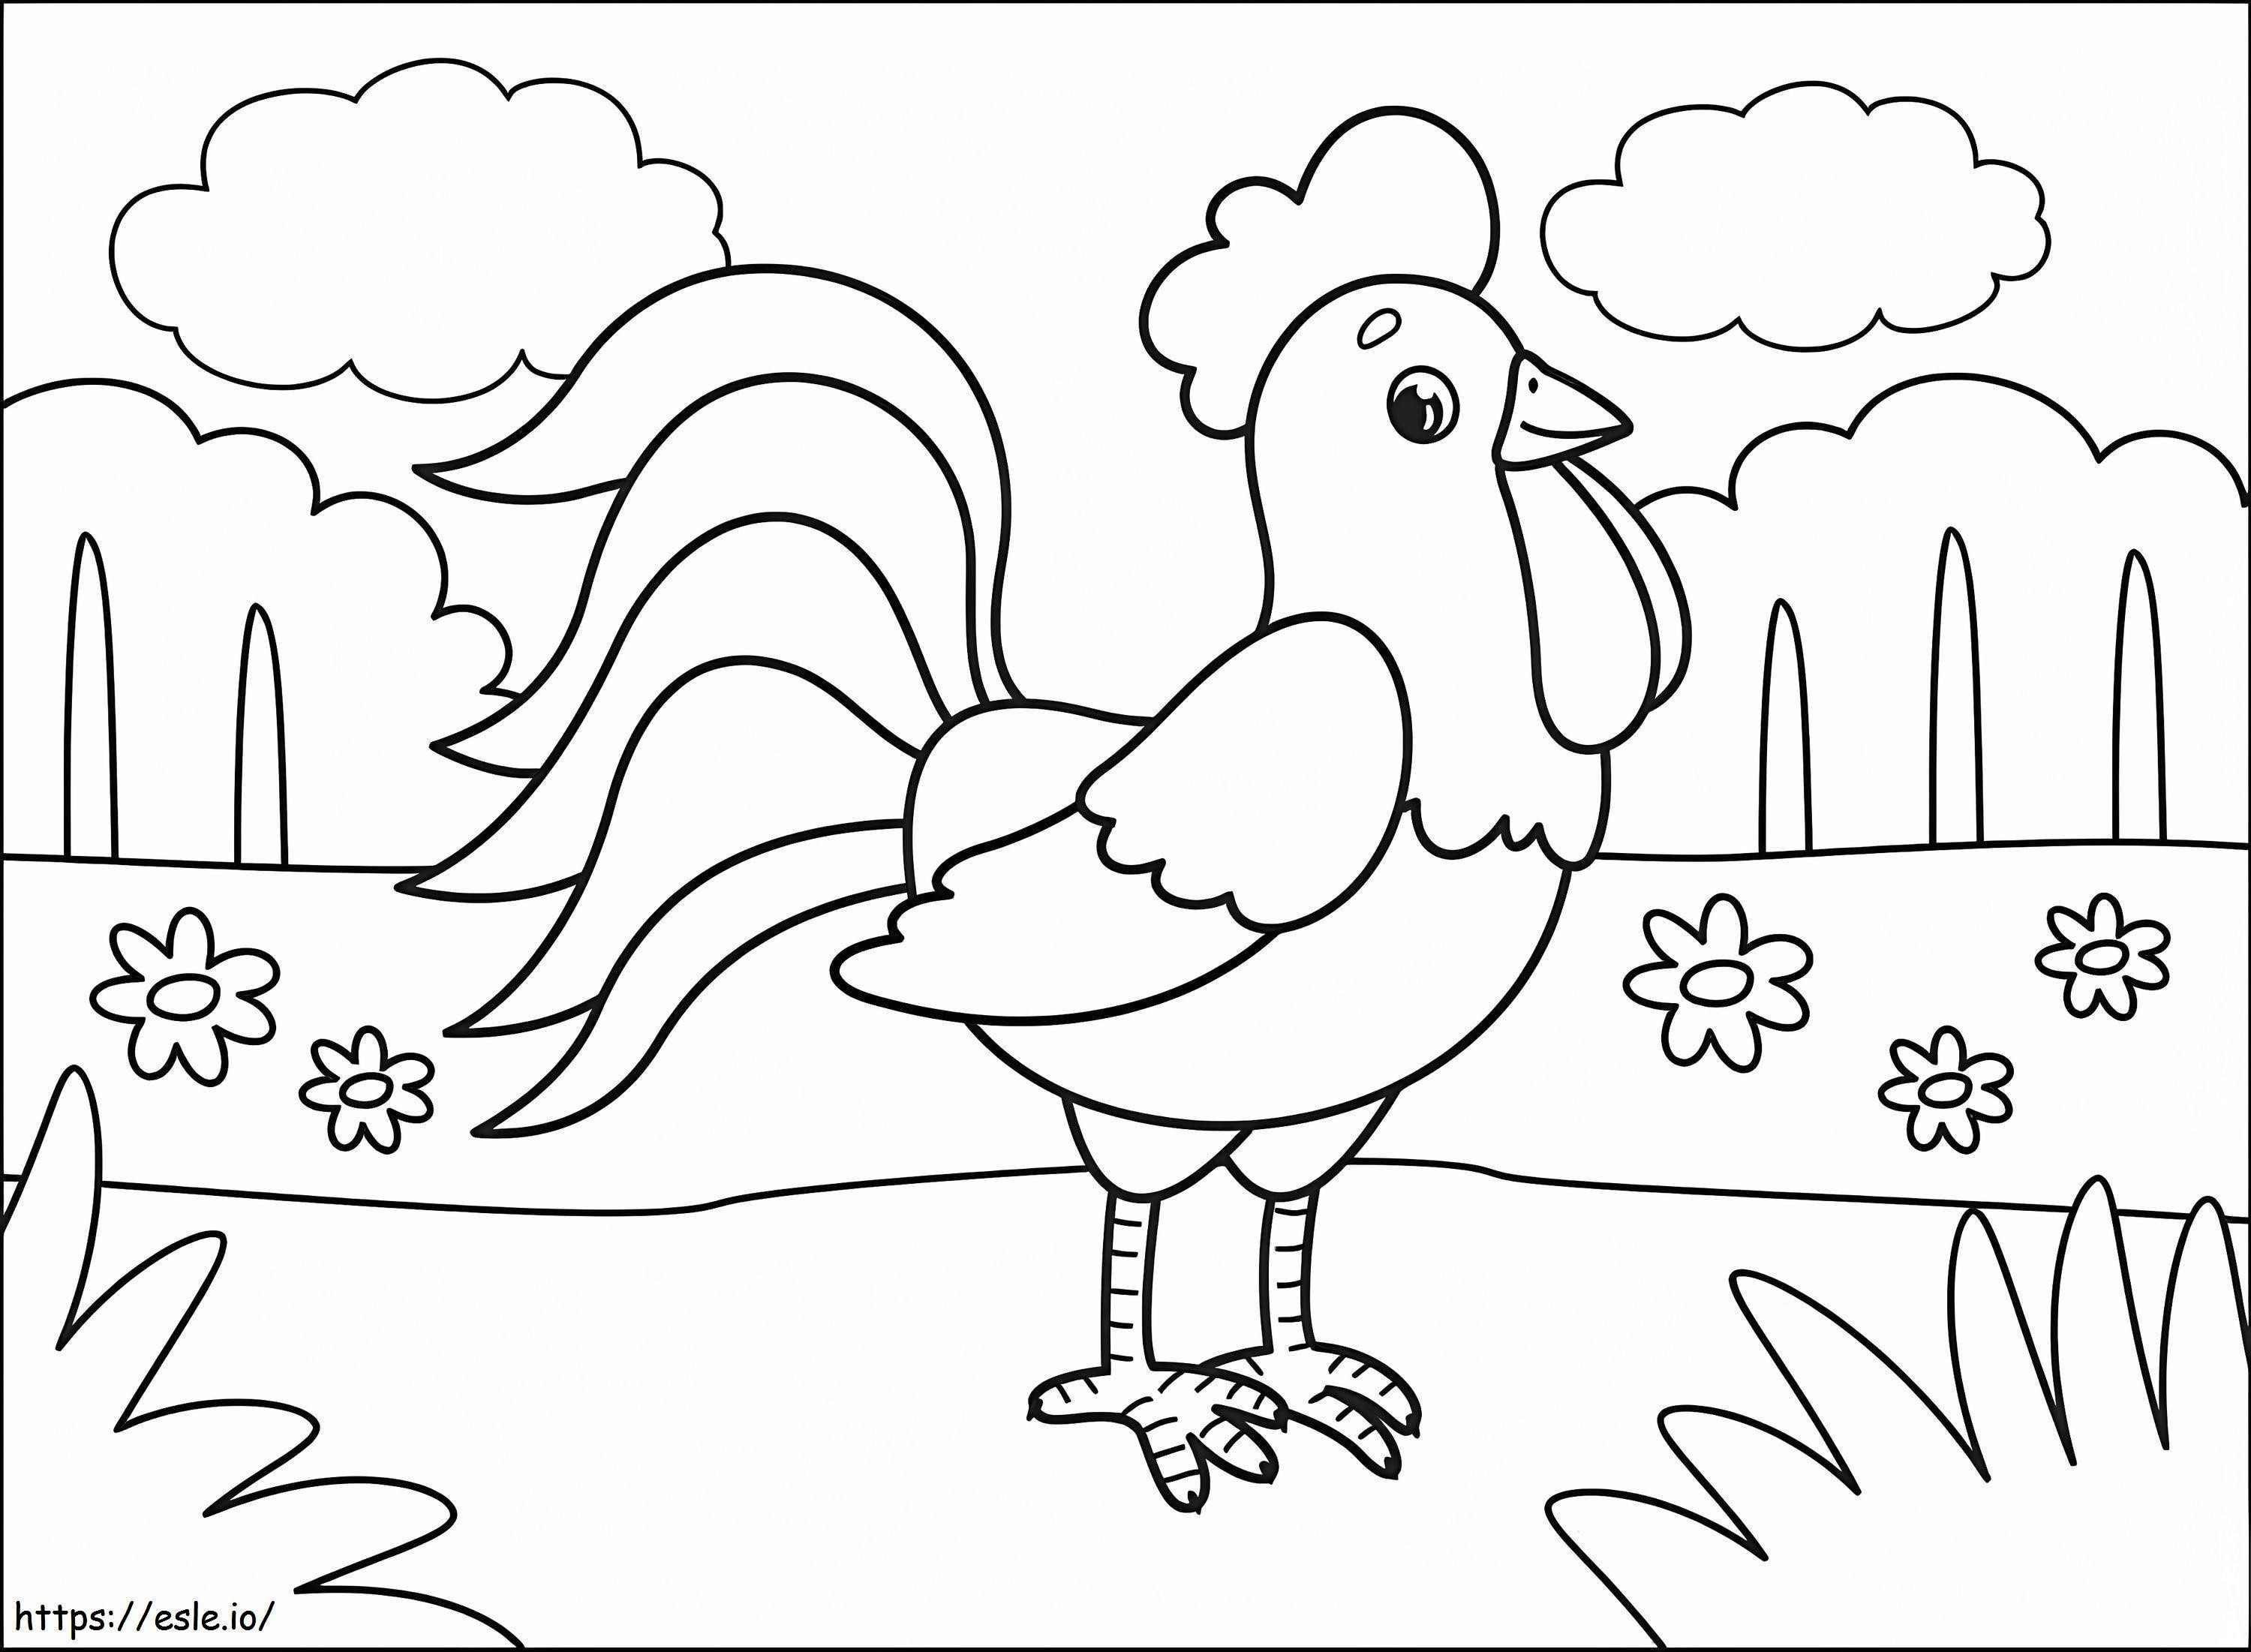 Gallo de dibujos animados para colorear